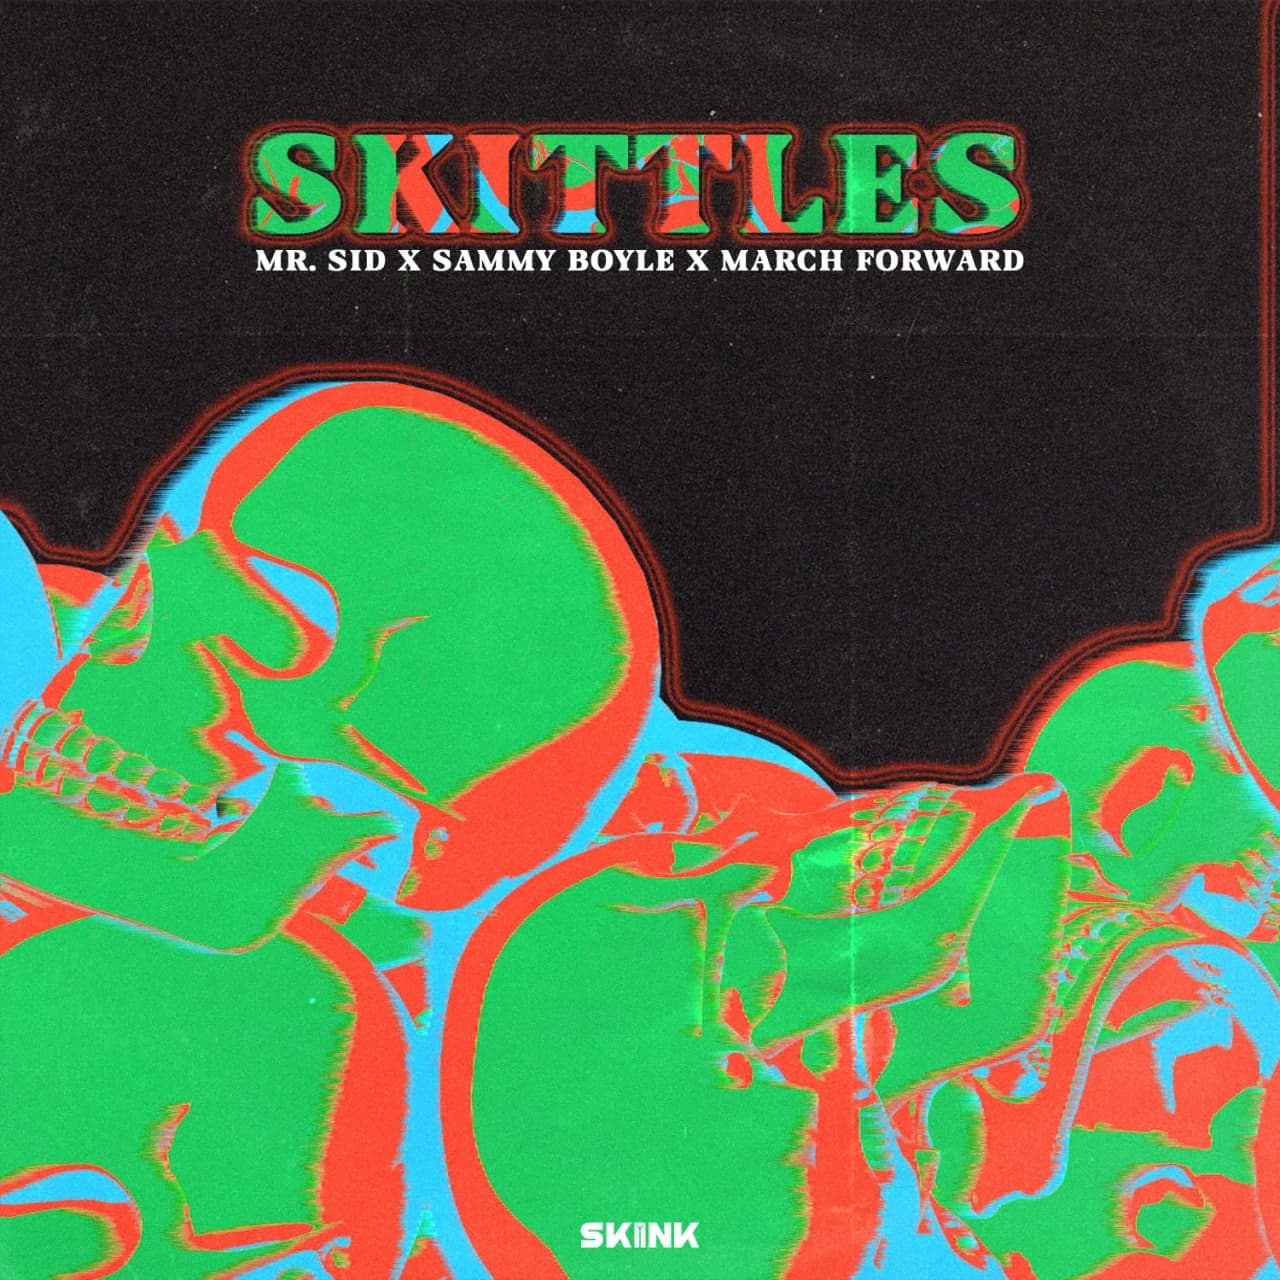 Mr. Sid & Sammy Boyle, March Forward - Skittles (Extended Mix)